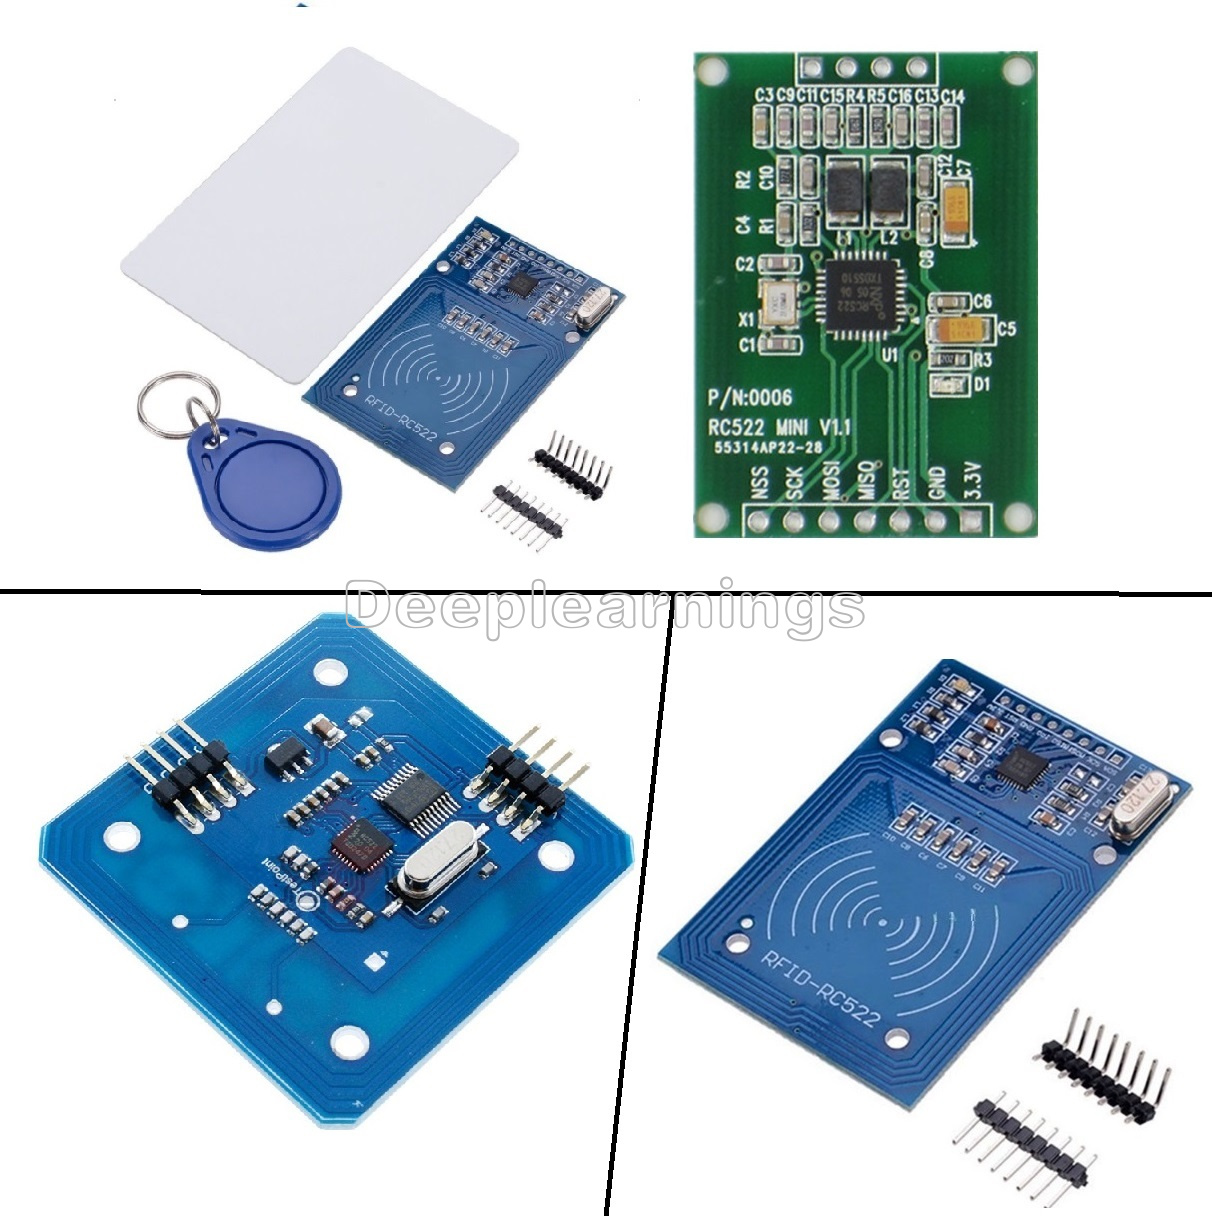 RC522 13.56Mhz RFID Module Unit I2C//SPI Proximity Reader IC S50 Key Tag